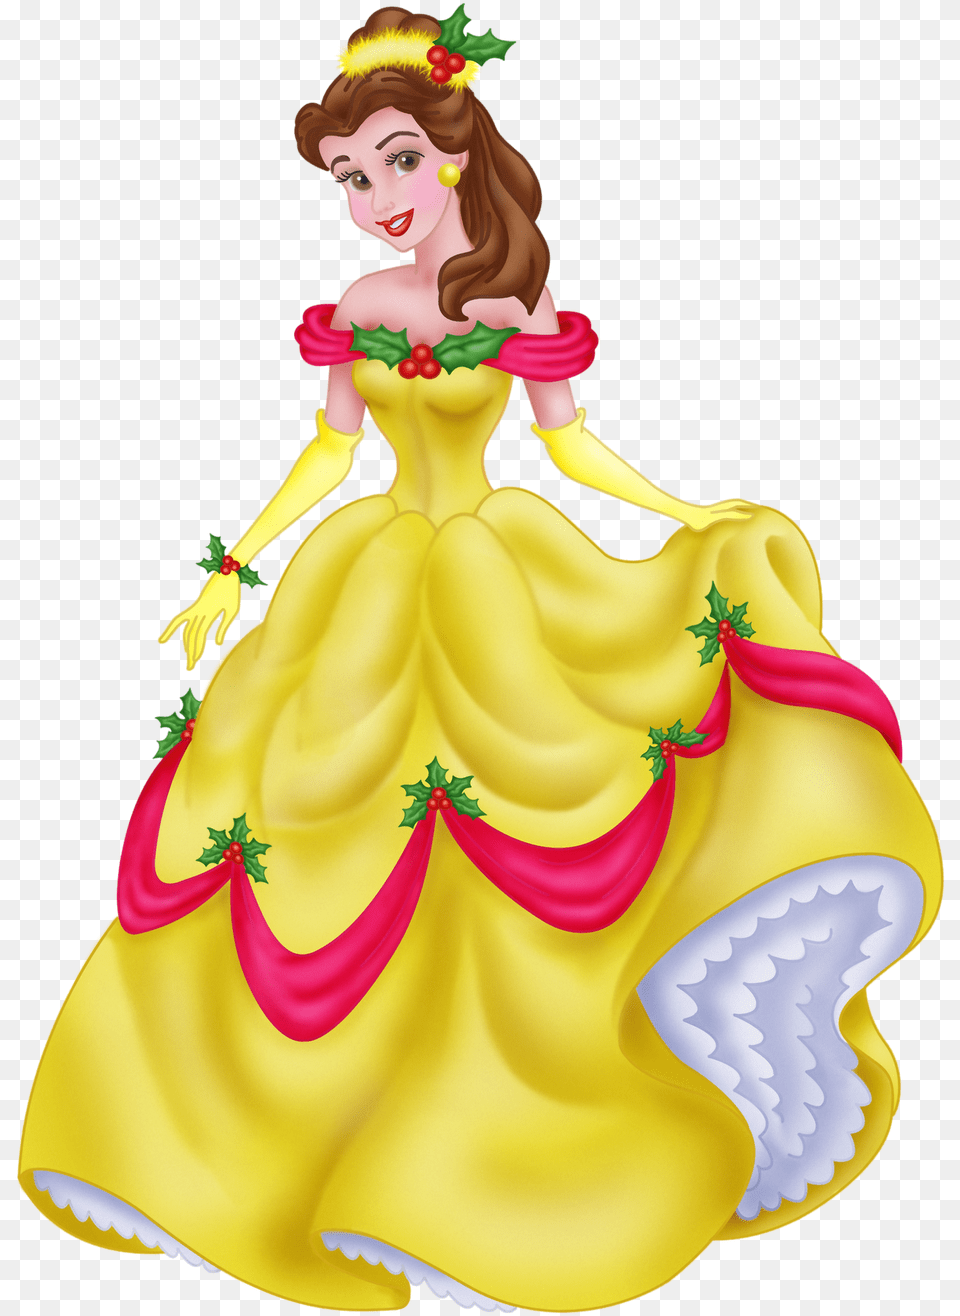 Disney Princesses Clipart Christmas Princesas Disney Imagens Princesas Da Disney, Figurine, Doll, Toy, Clothing Free Transparent Png